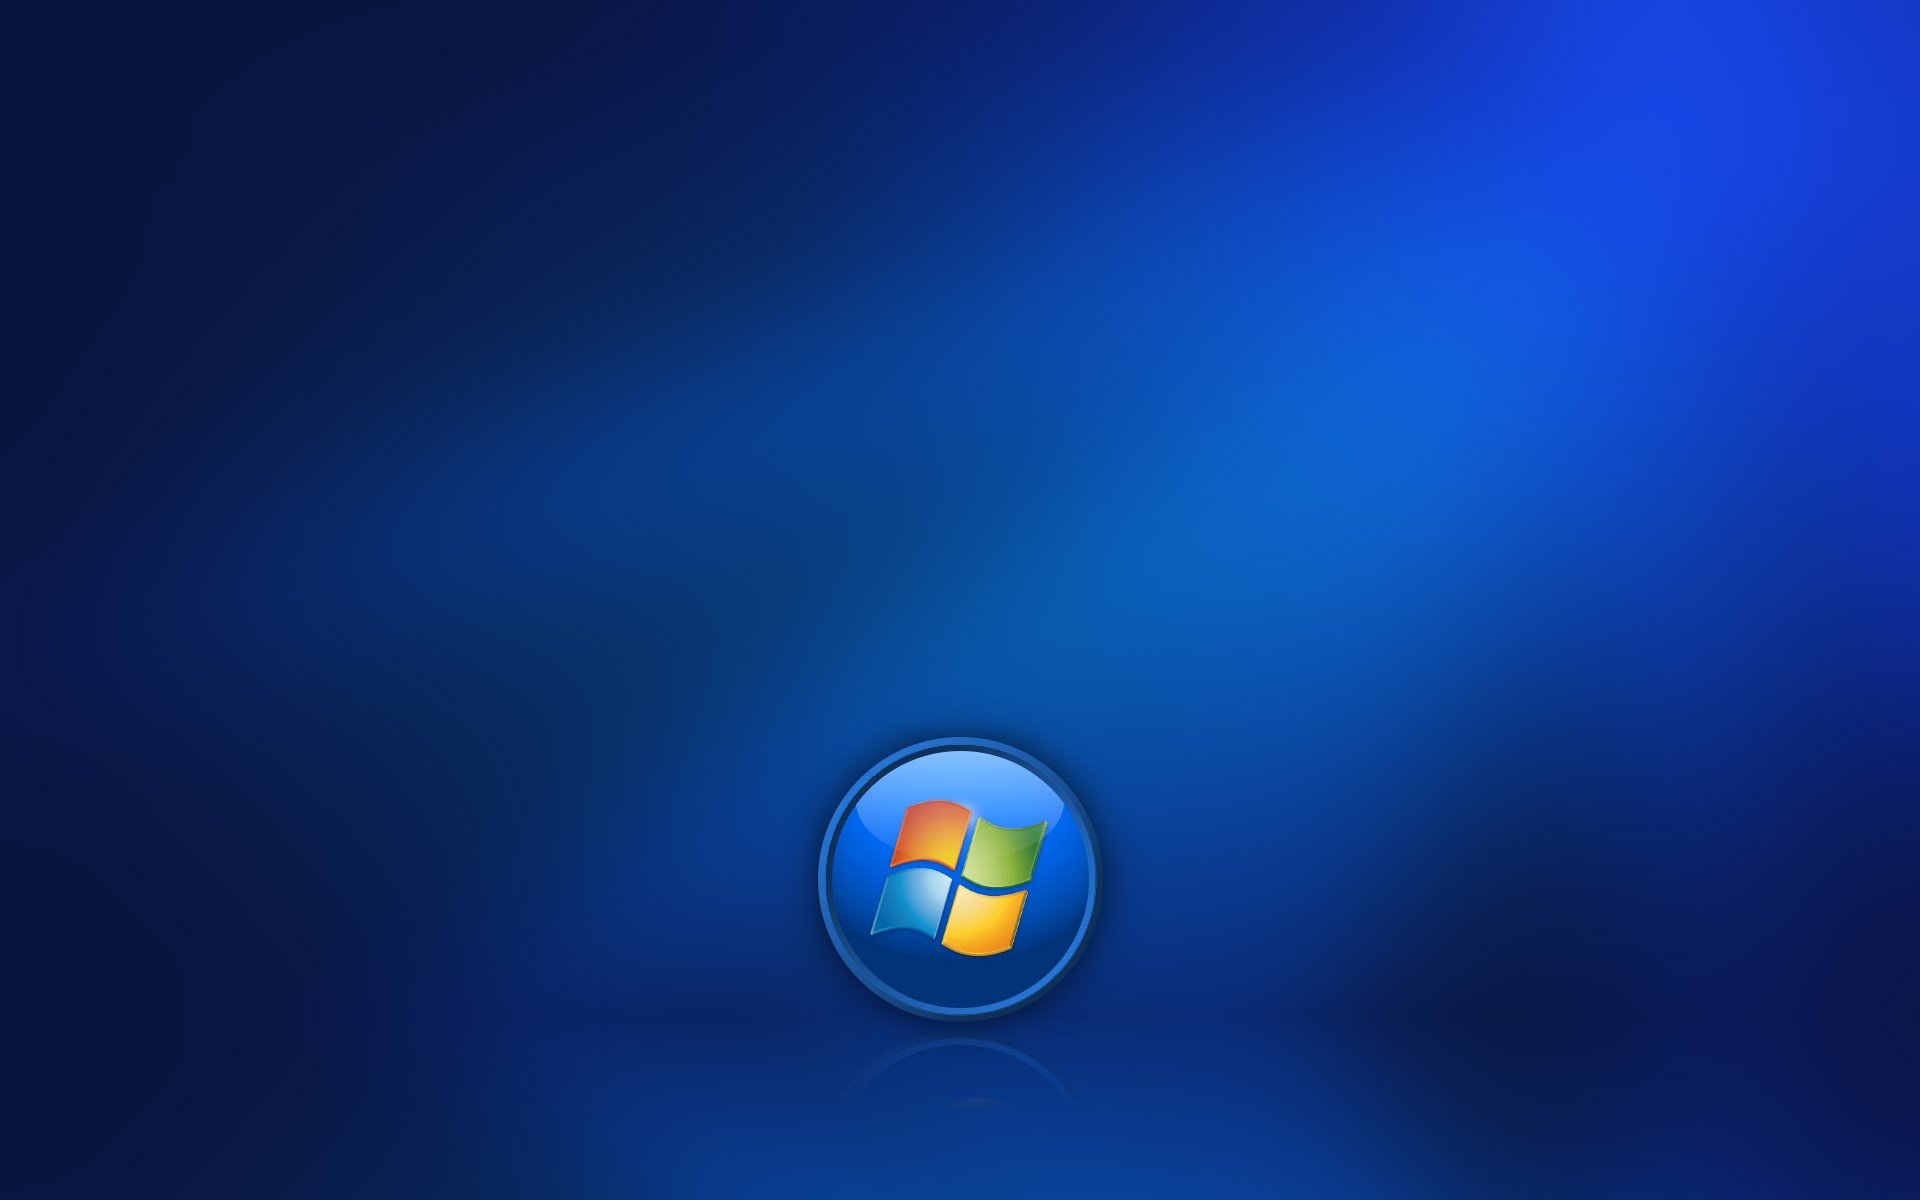 picsketch software free download windows 7